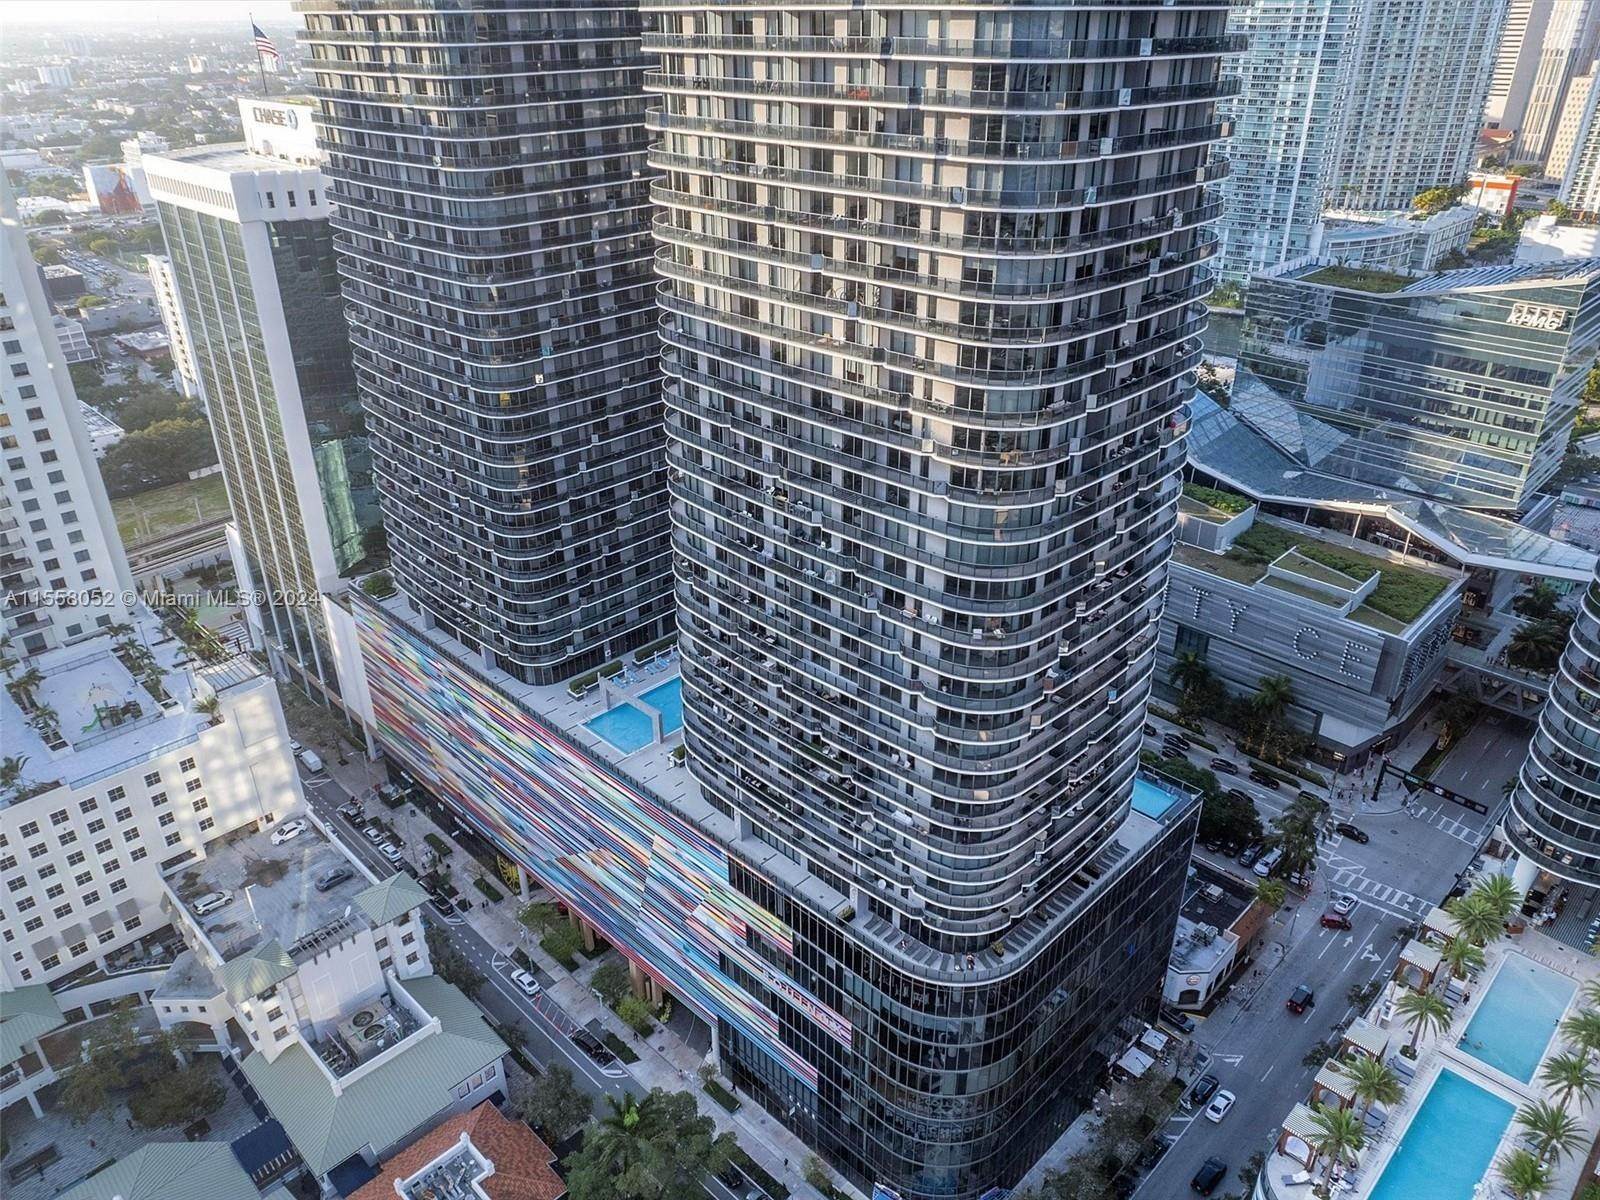 Condominium for Sale at Brickell, Miami, FL 33130